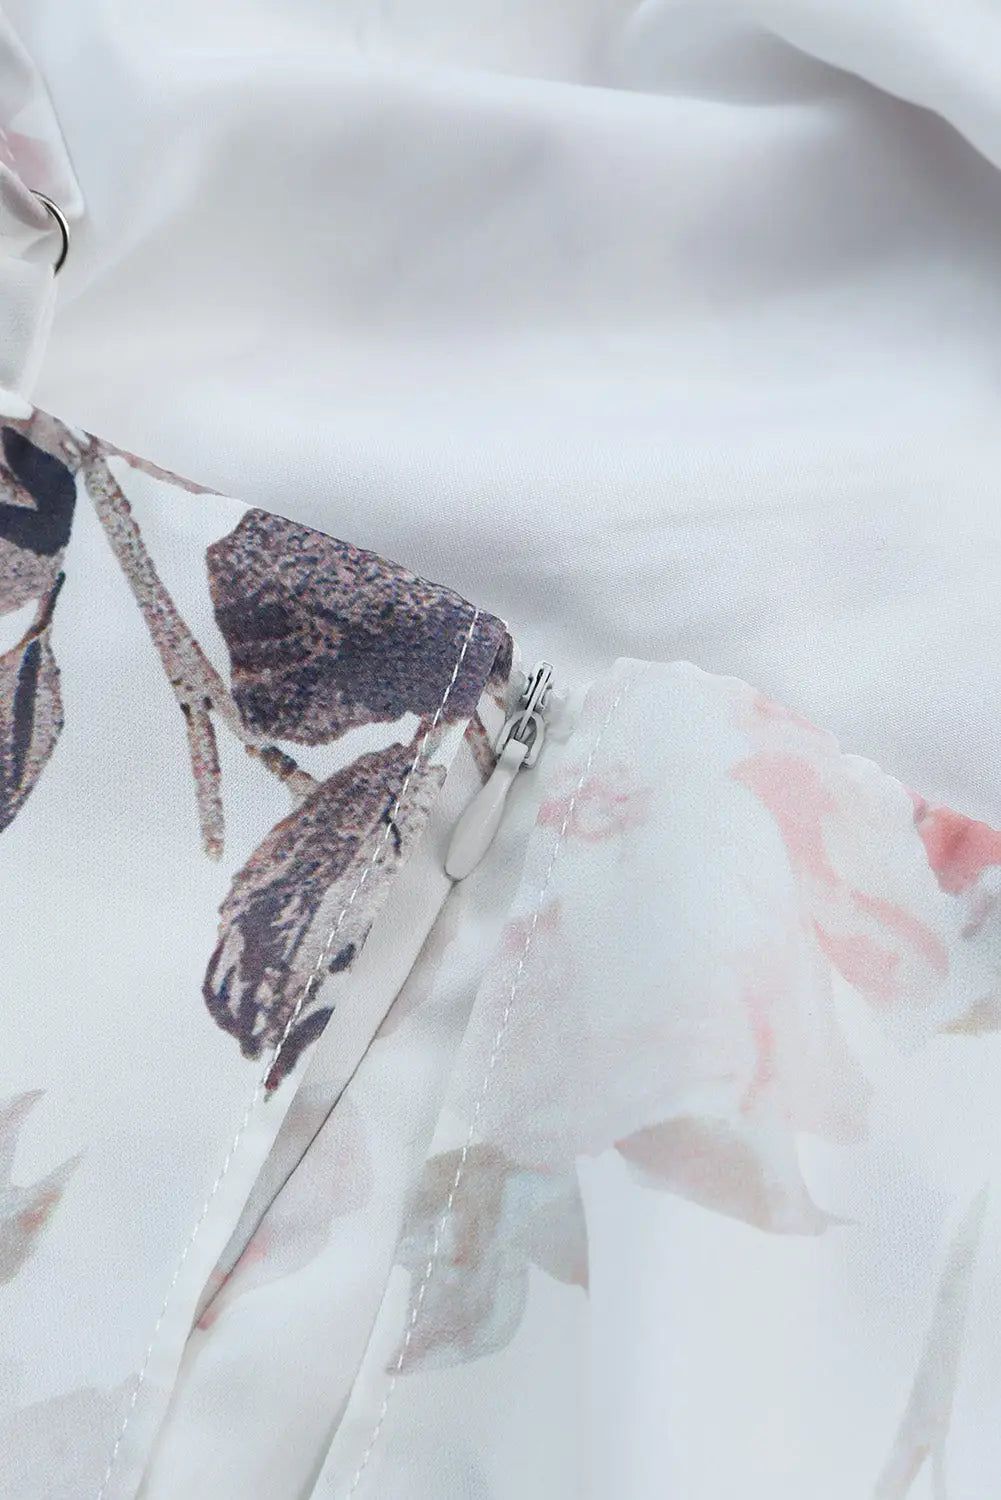 White floral slit ruffled halterneck maxi dress - dresses